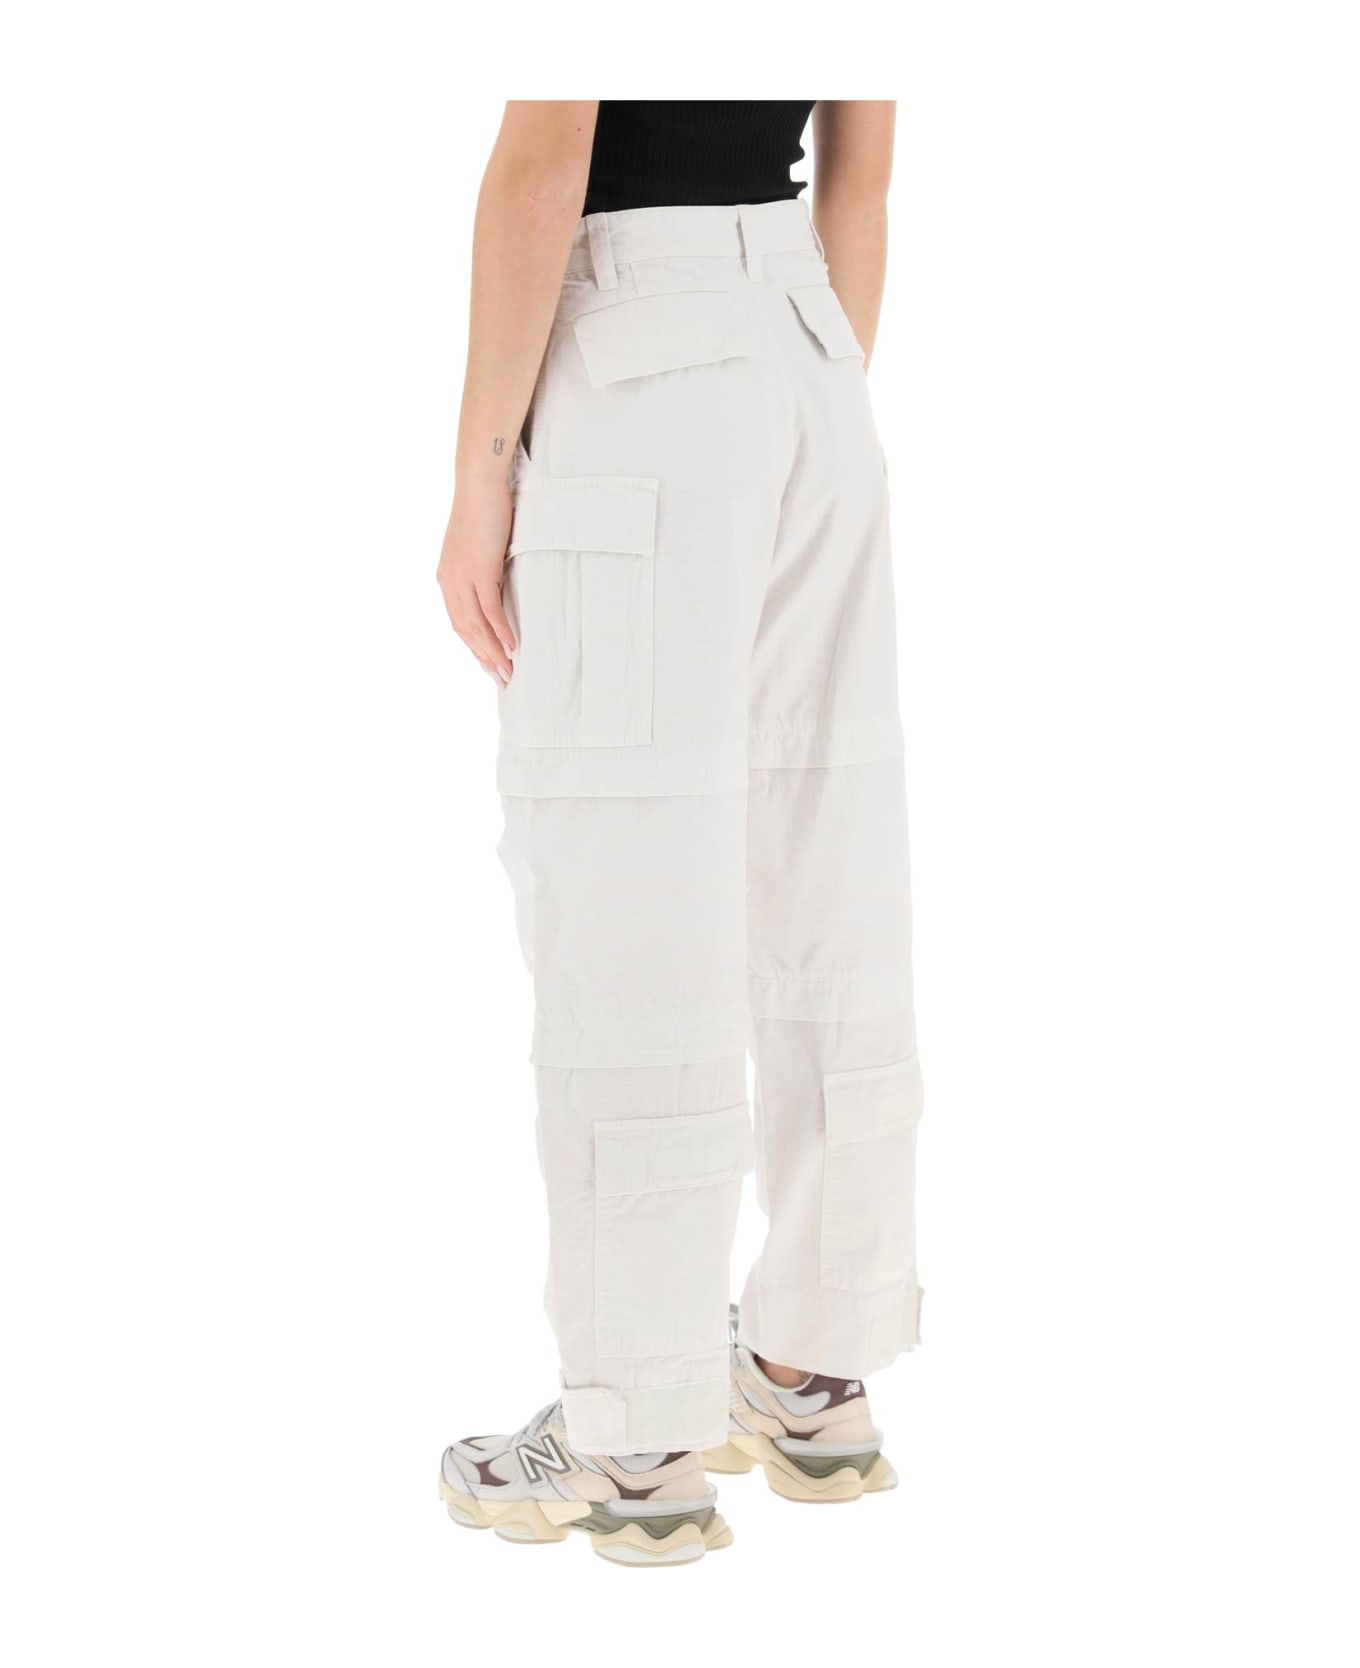 DARKPARK 'julia' Ripstop Cotton Cargo Pants - WHITE ボトムス